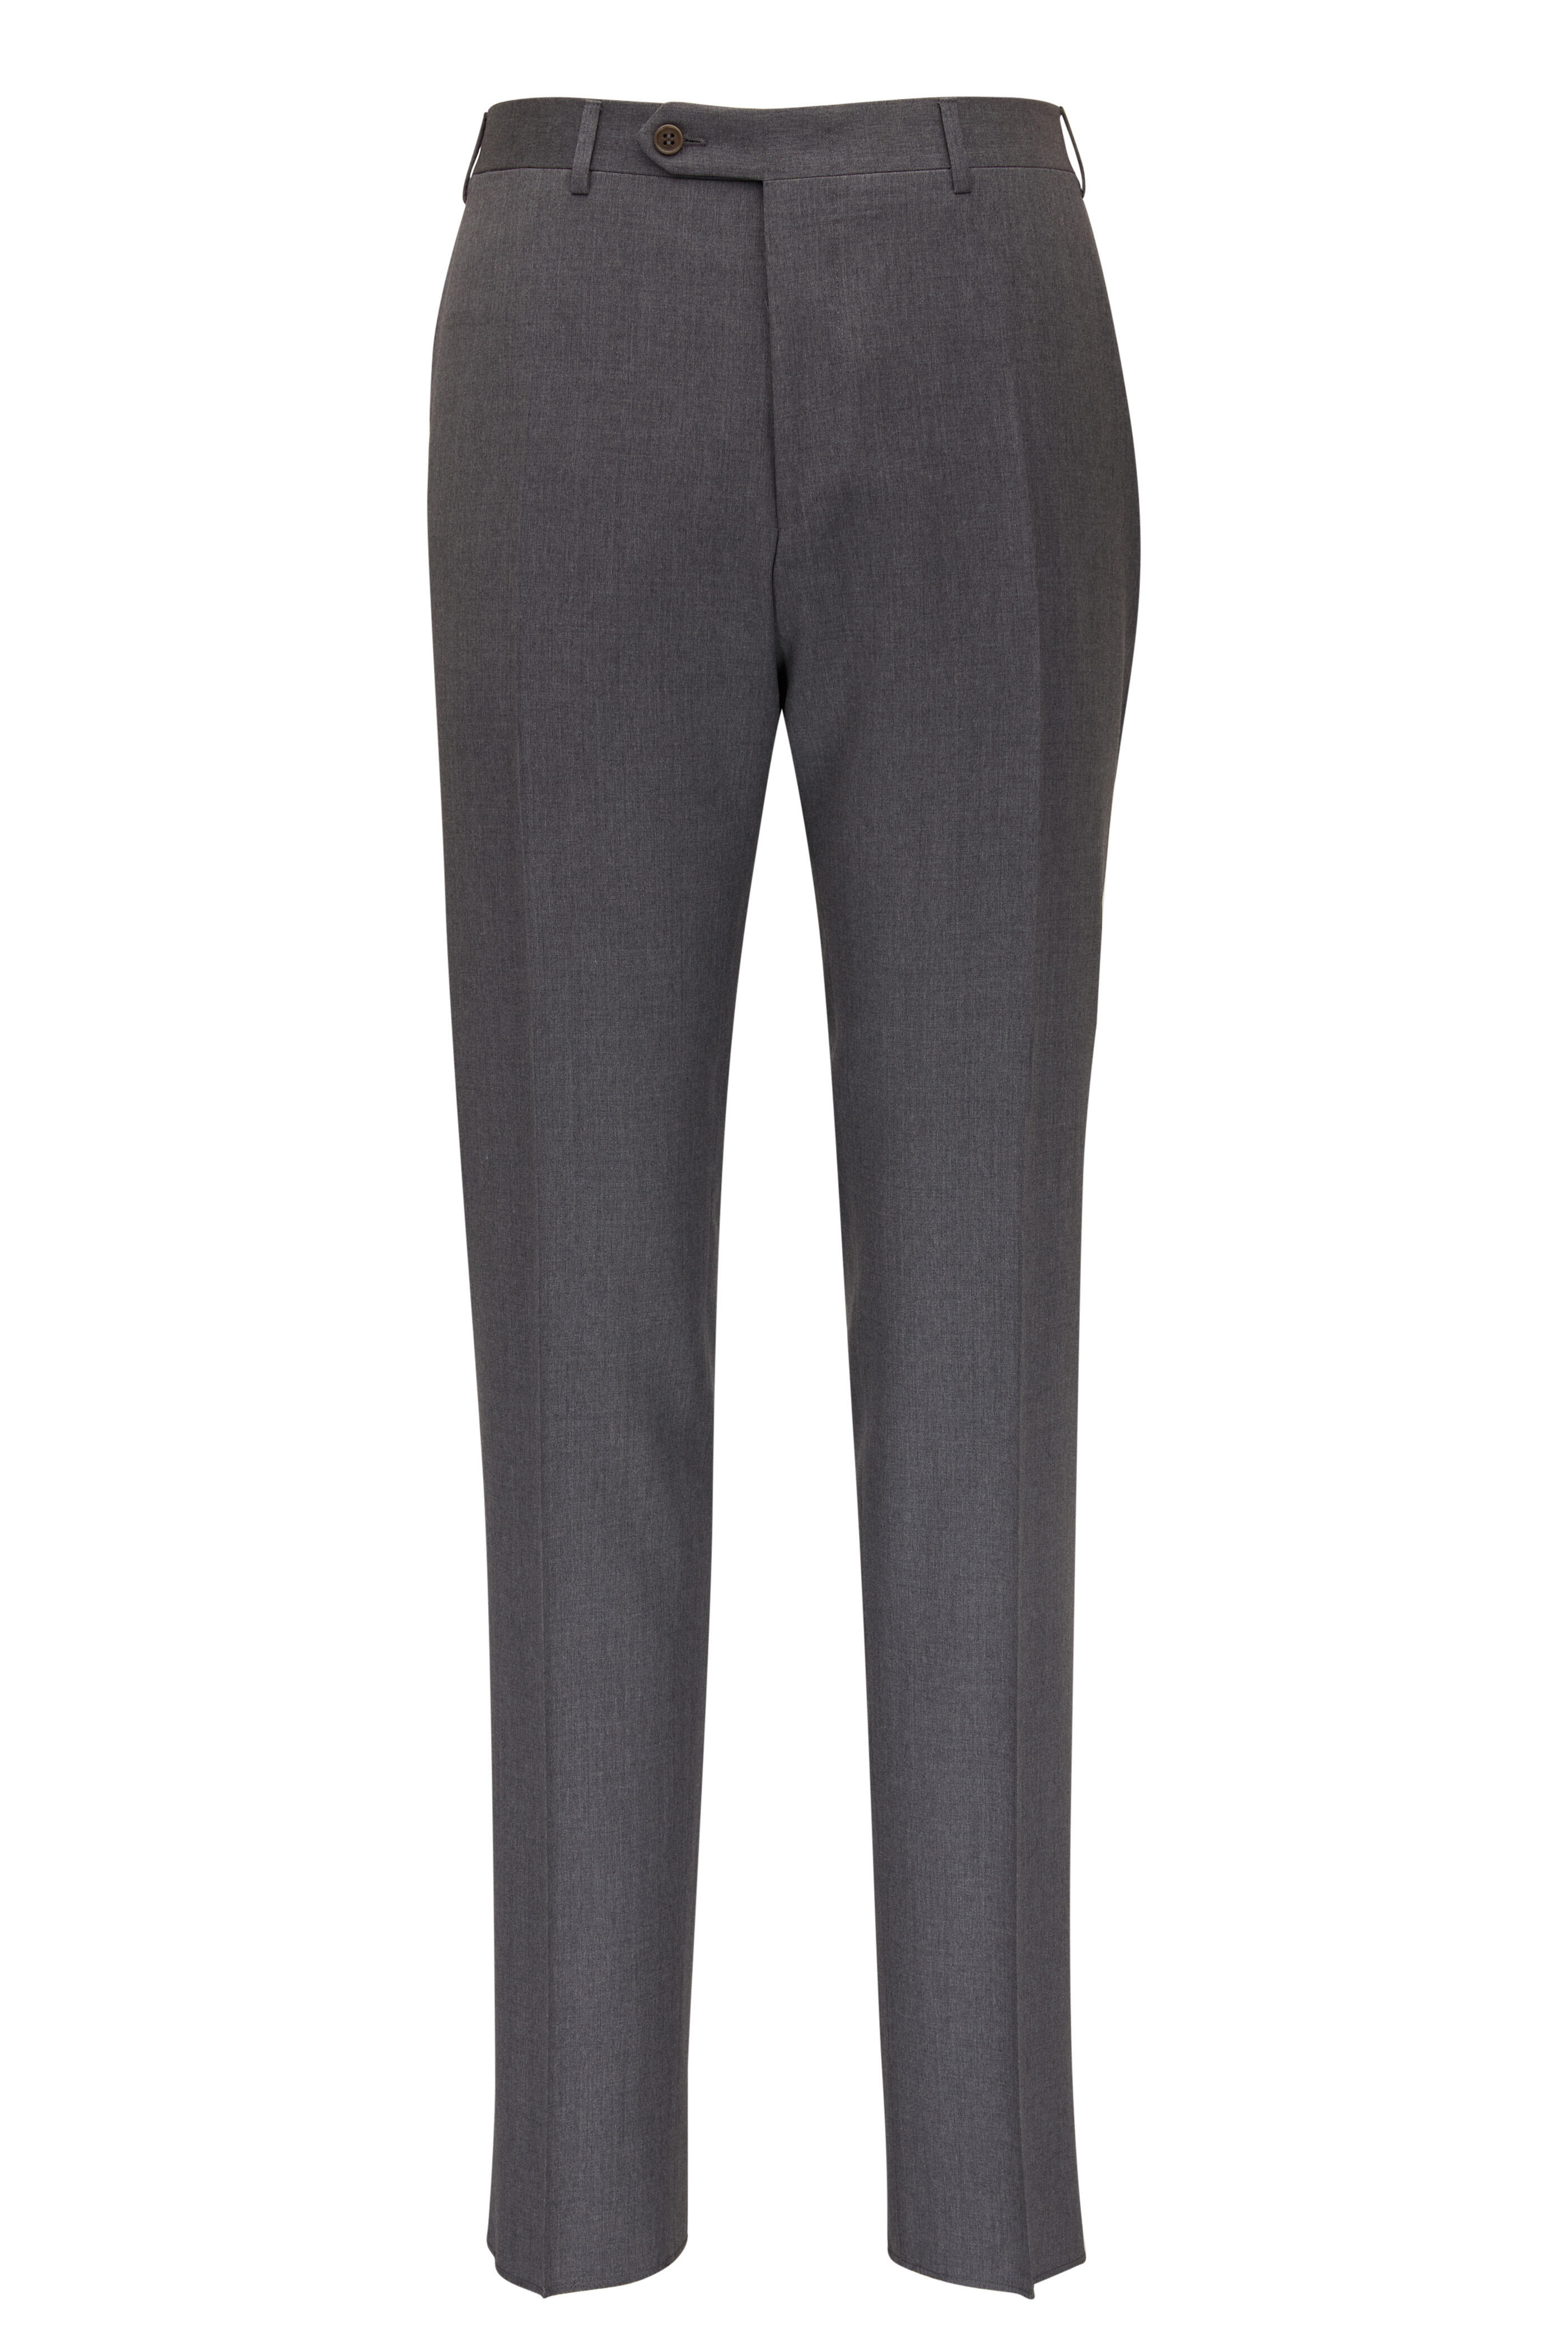 Canali - Medium Gray Wool Pant | Mitchell Stores